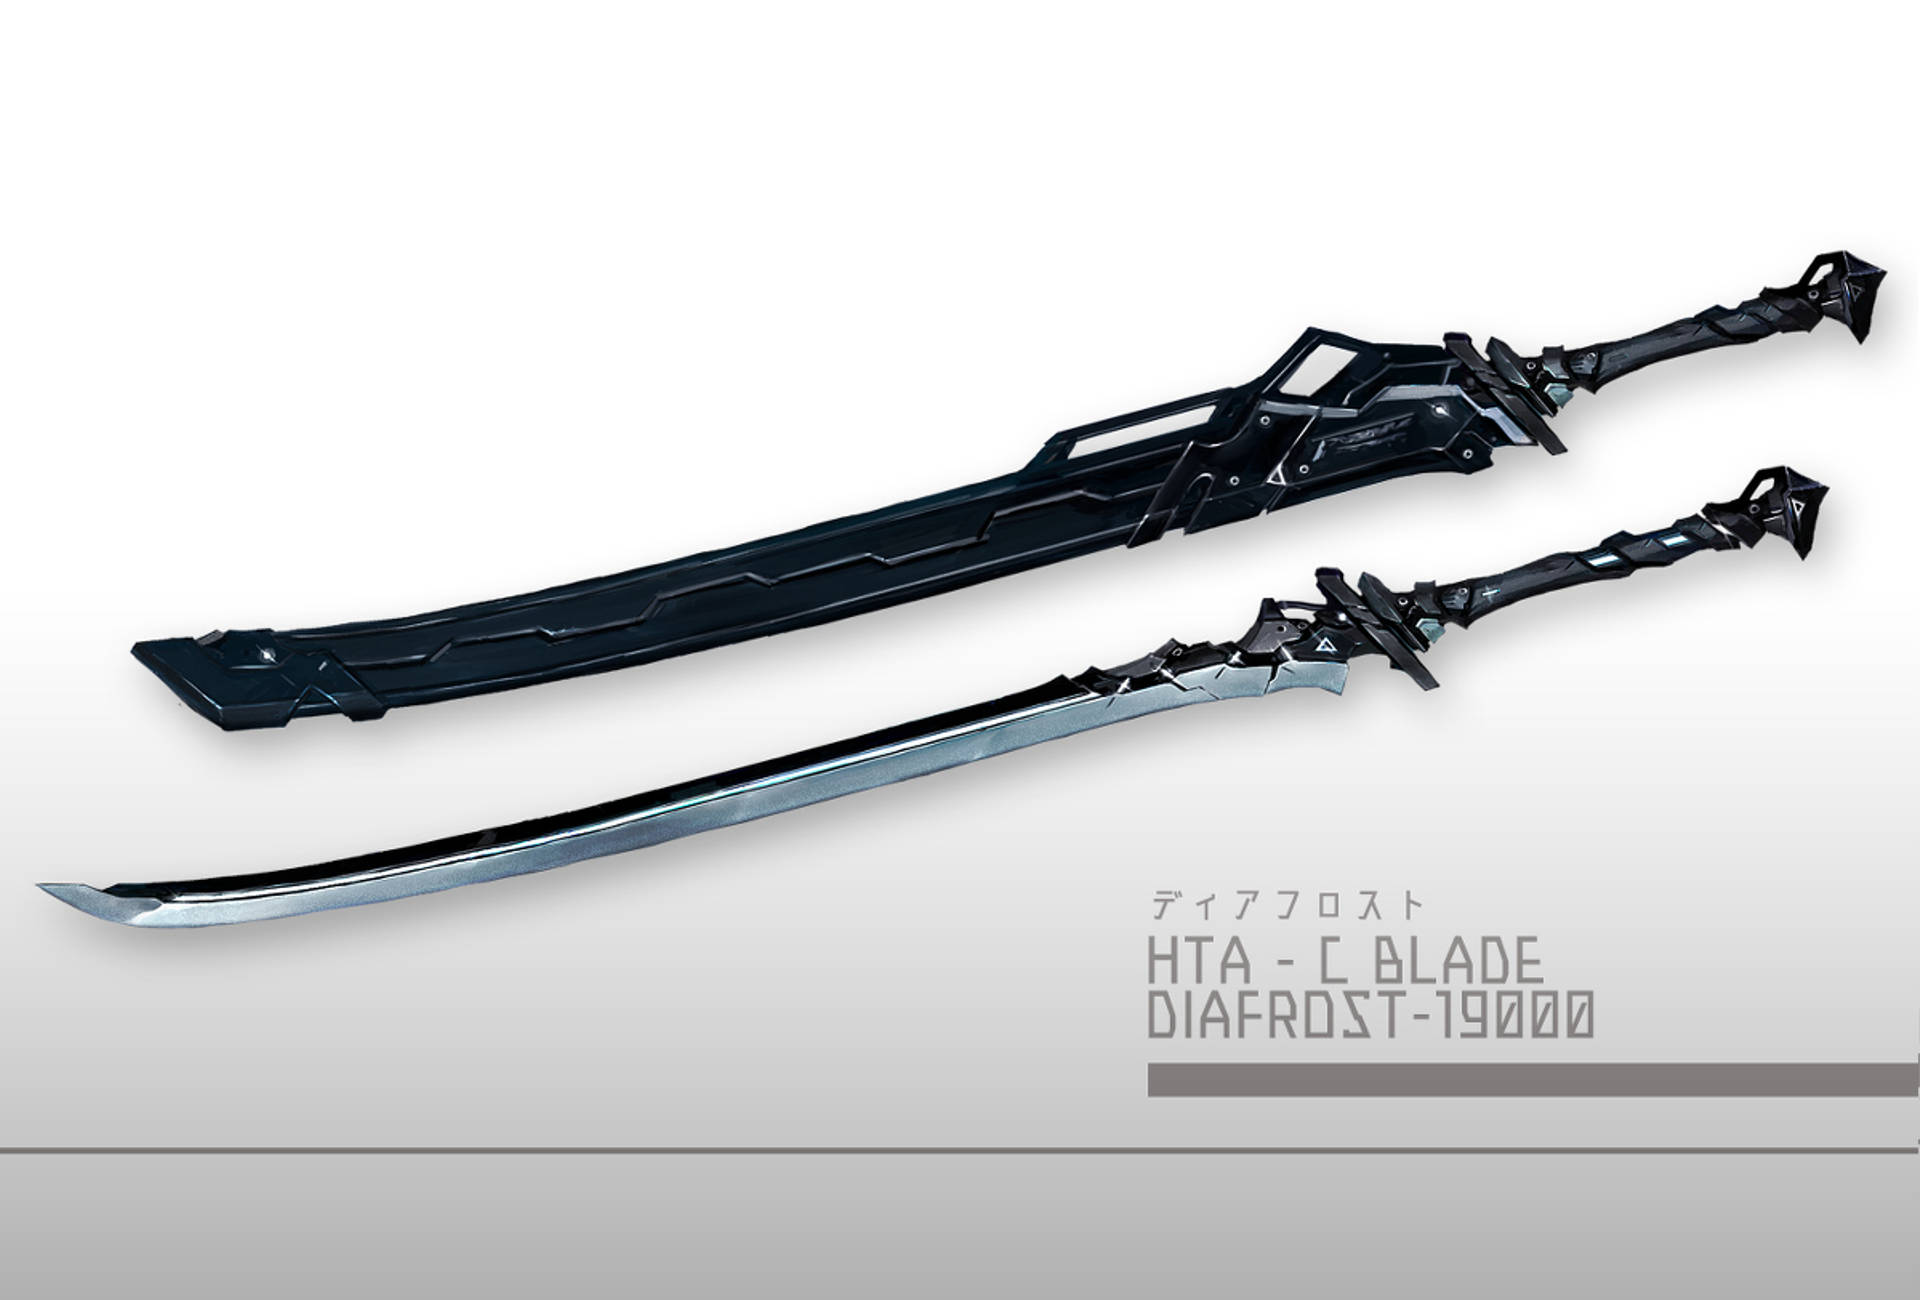 Hta-c Blade Diafrost Sword Background